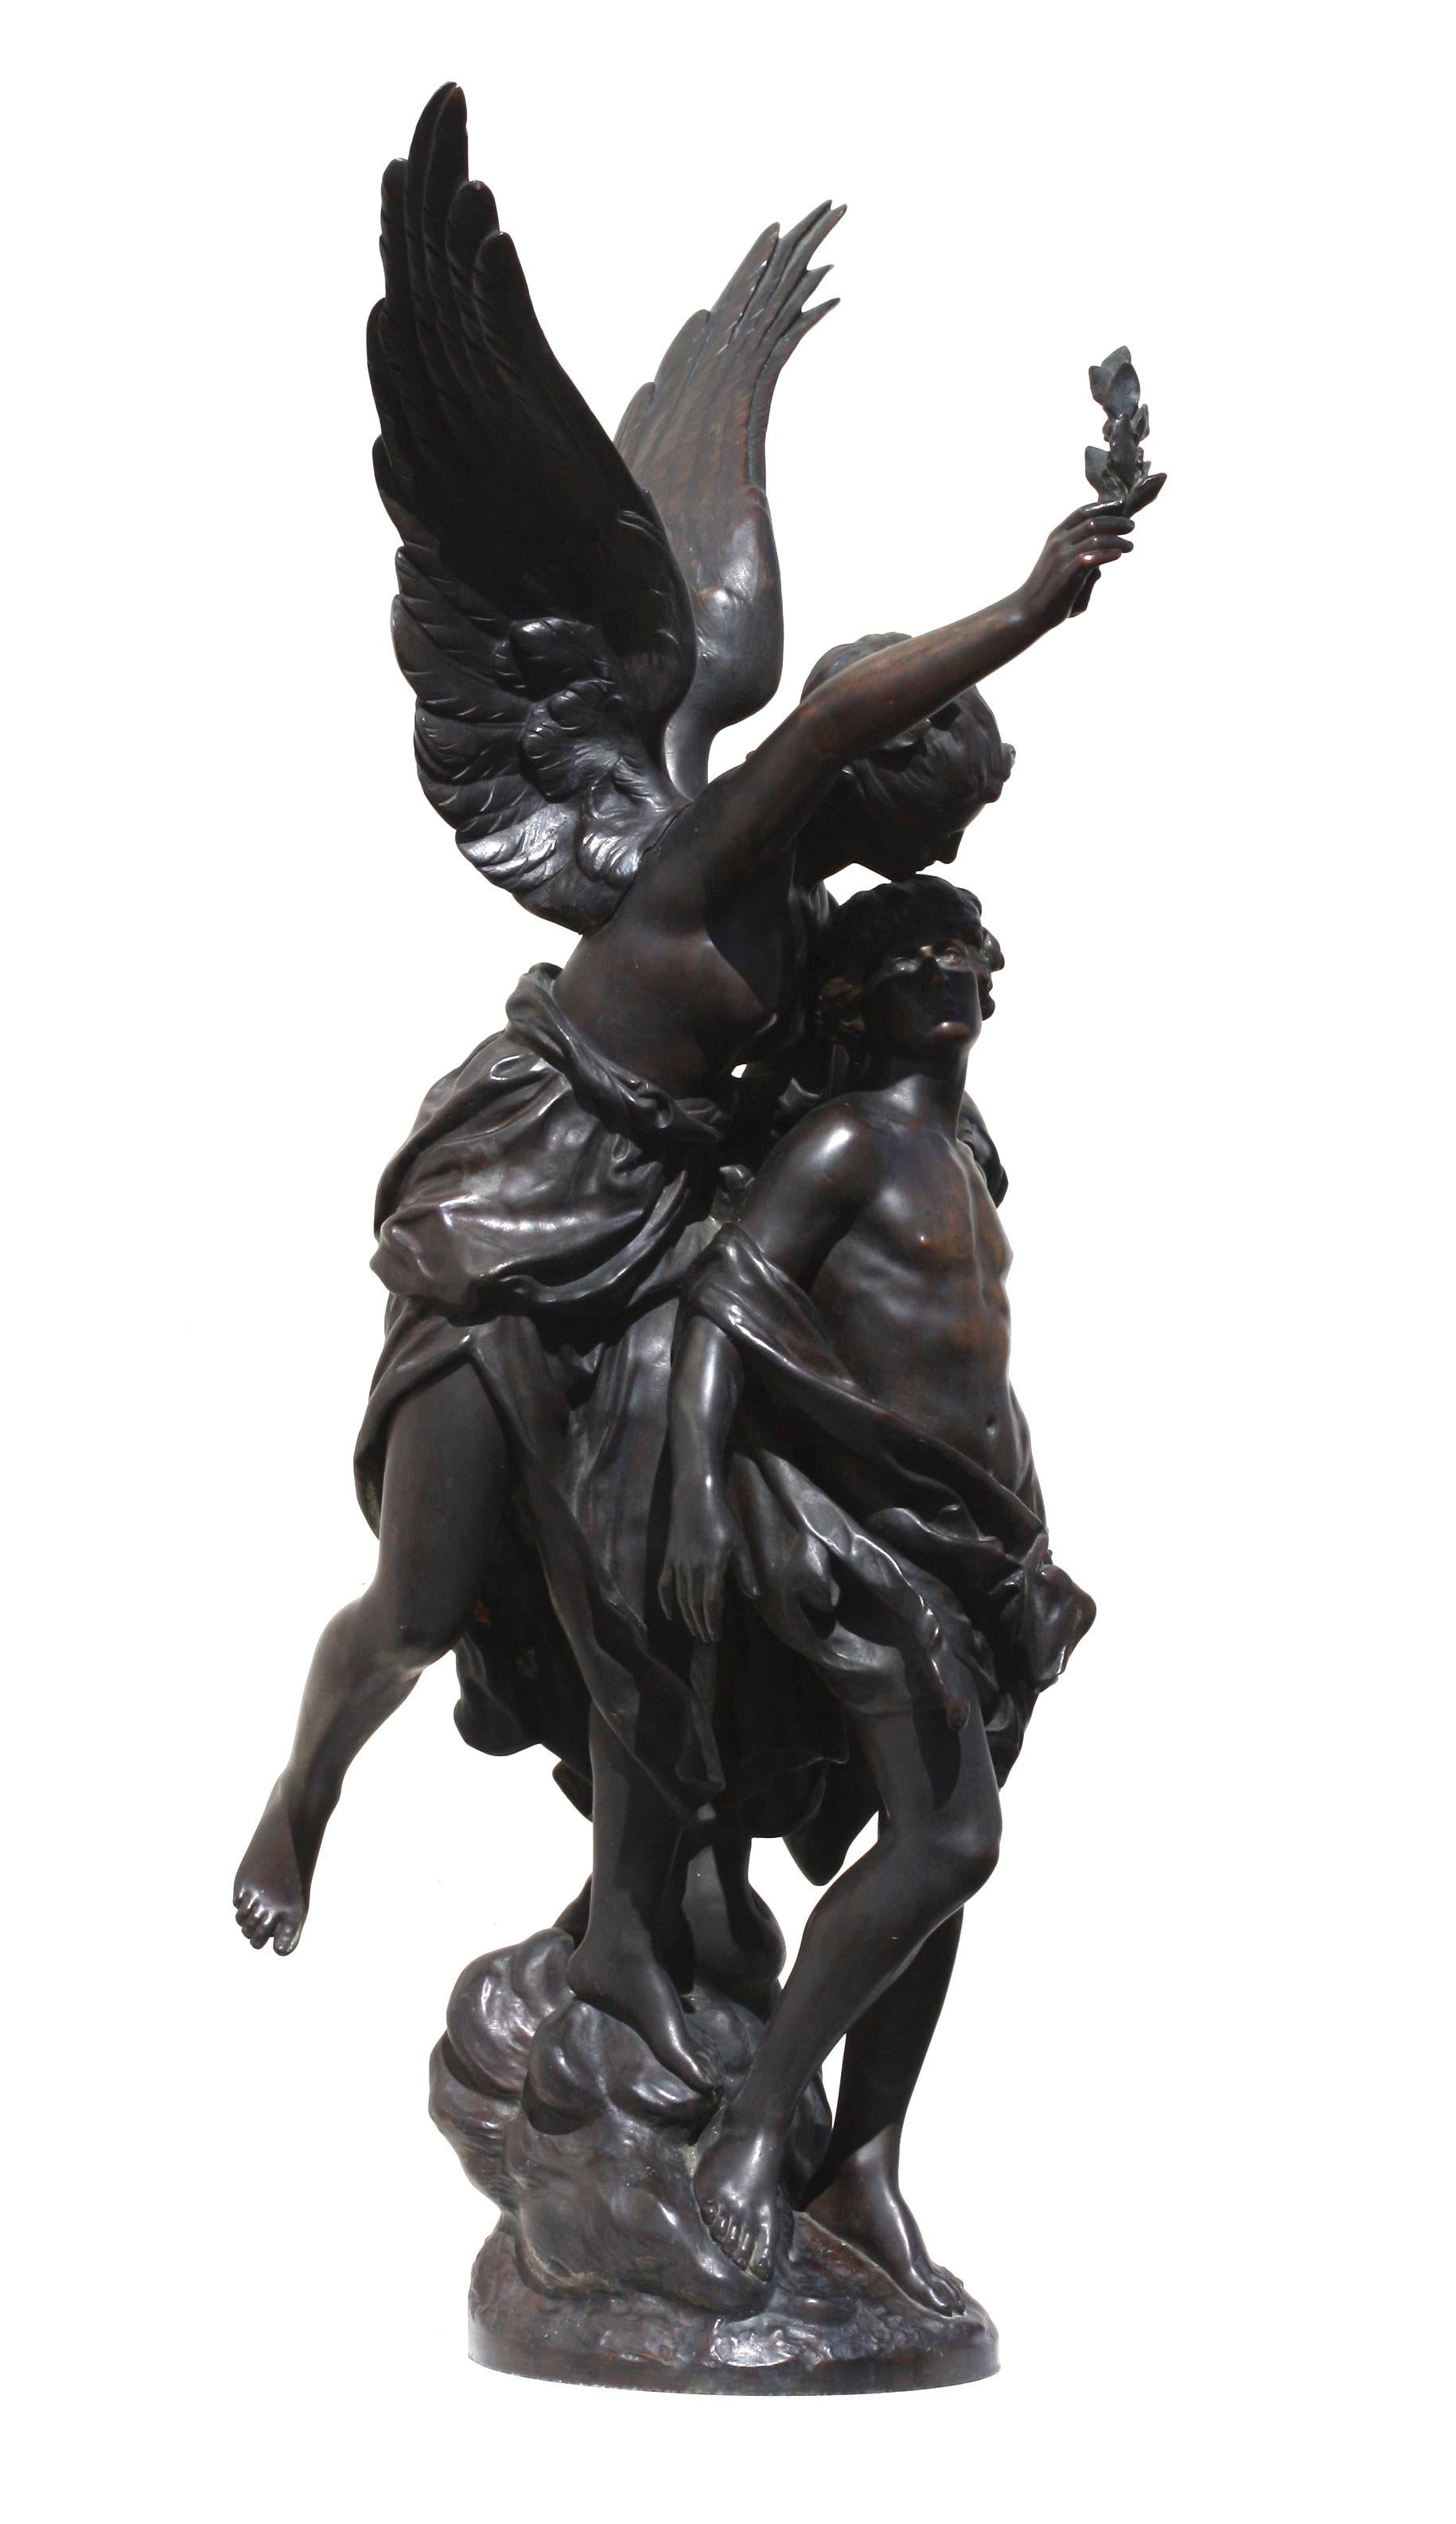 Mathurin Moreau, a Bronze Sculpture La Torche 'the Torch' 2